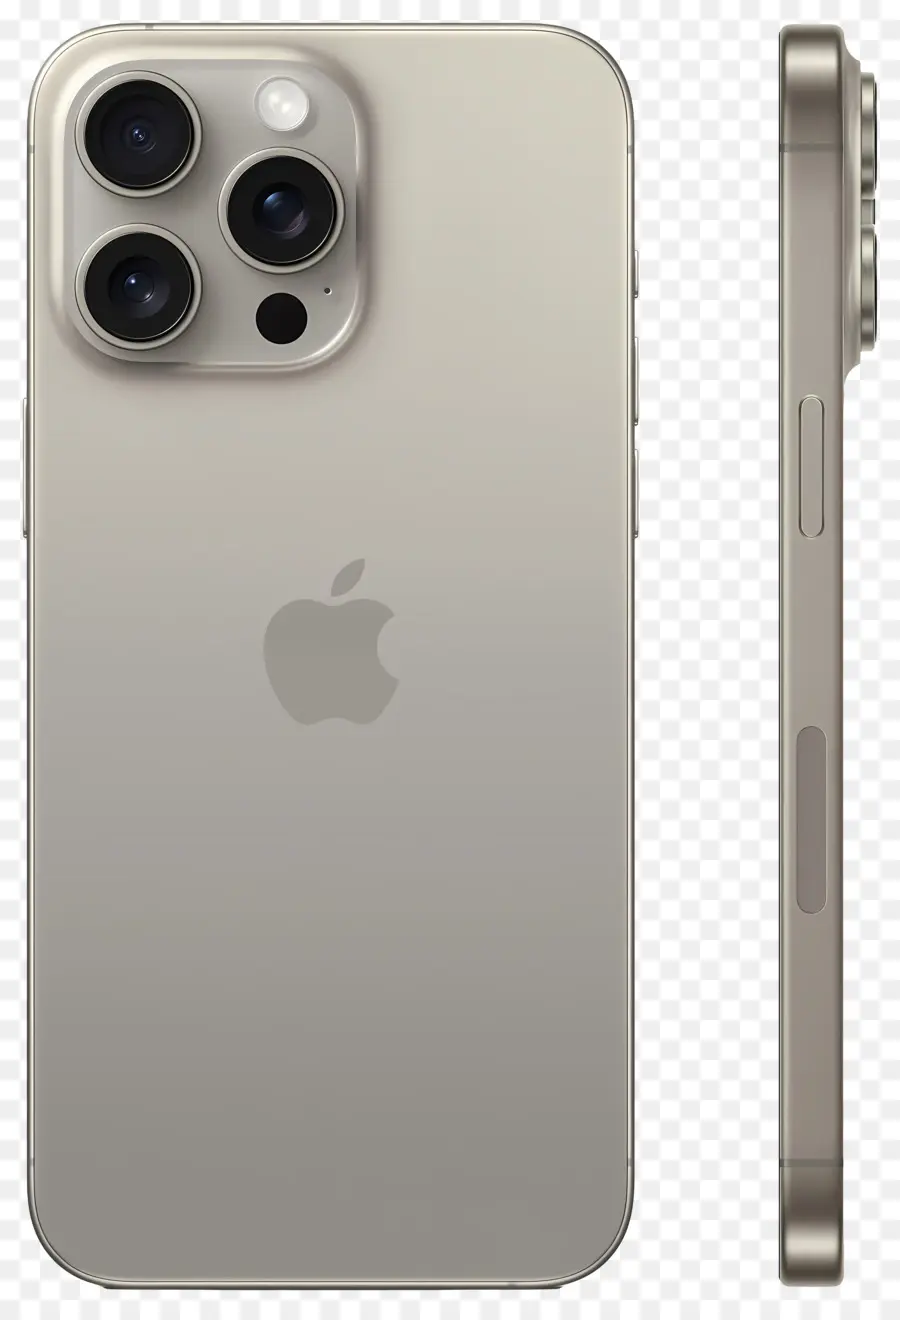 Kamera Objektiv - iPhone 11 Pro Max mit großem Kameraobjektiv